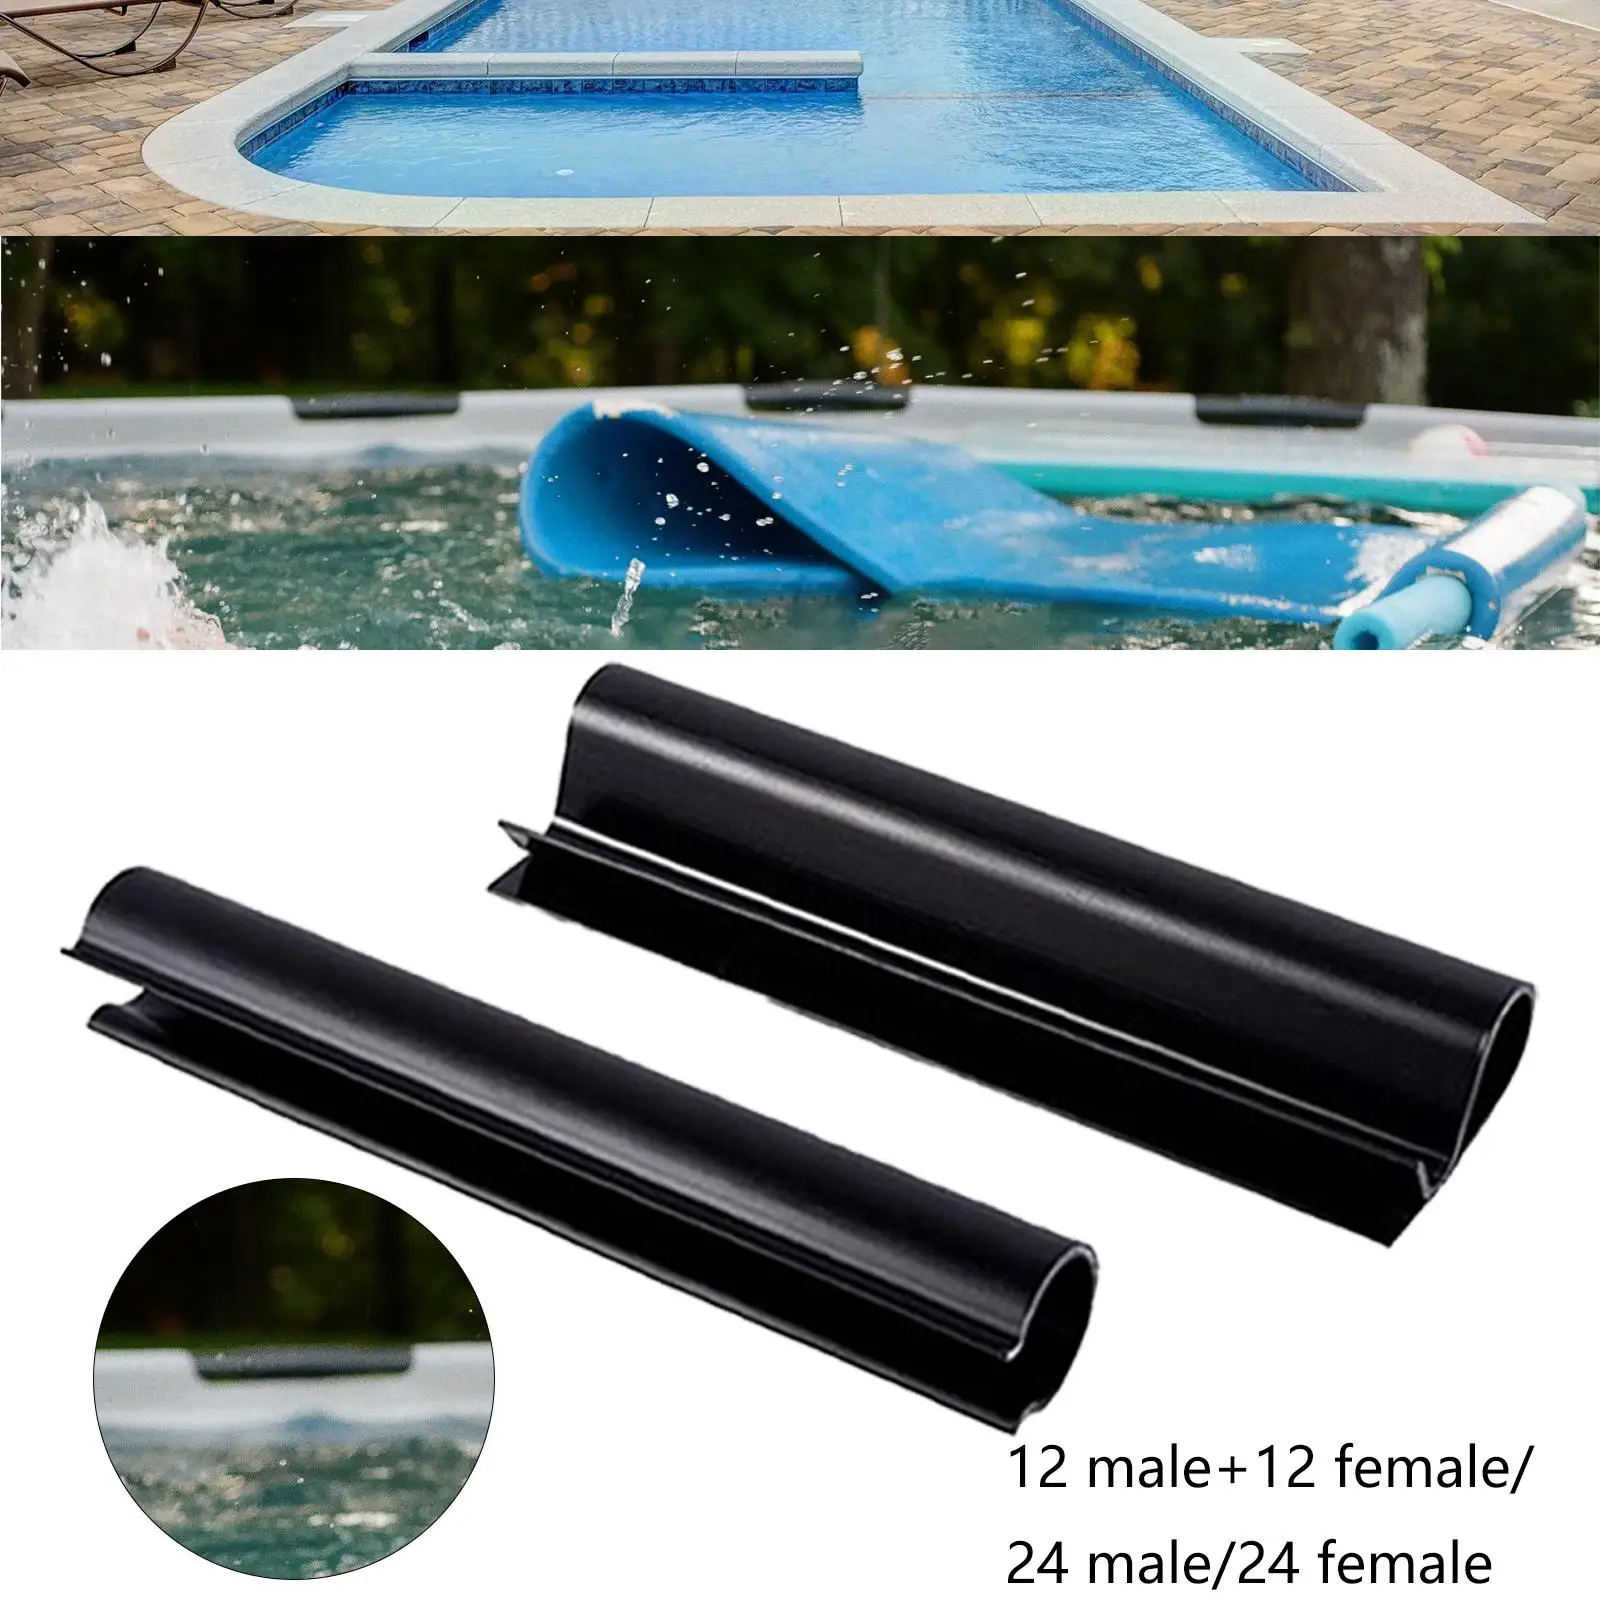 24Pcs 8cm pool lid Clips Pool Wind Guard Clips pool lid Clamps Pool Clips for pool lid Towel Photos clothes